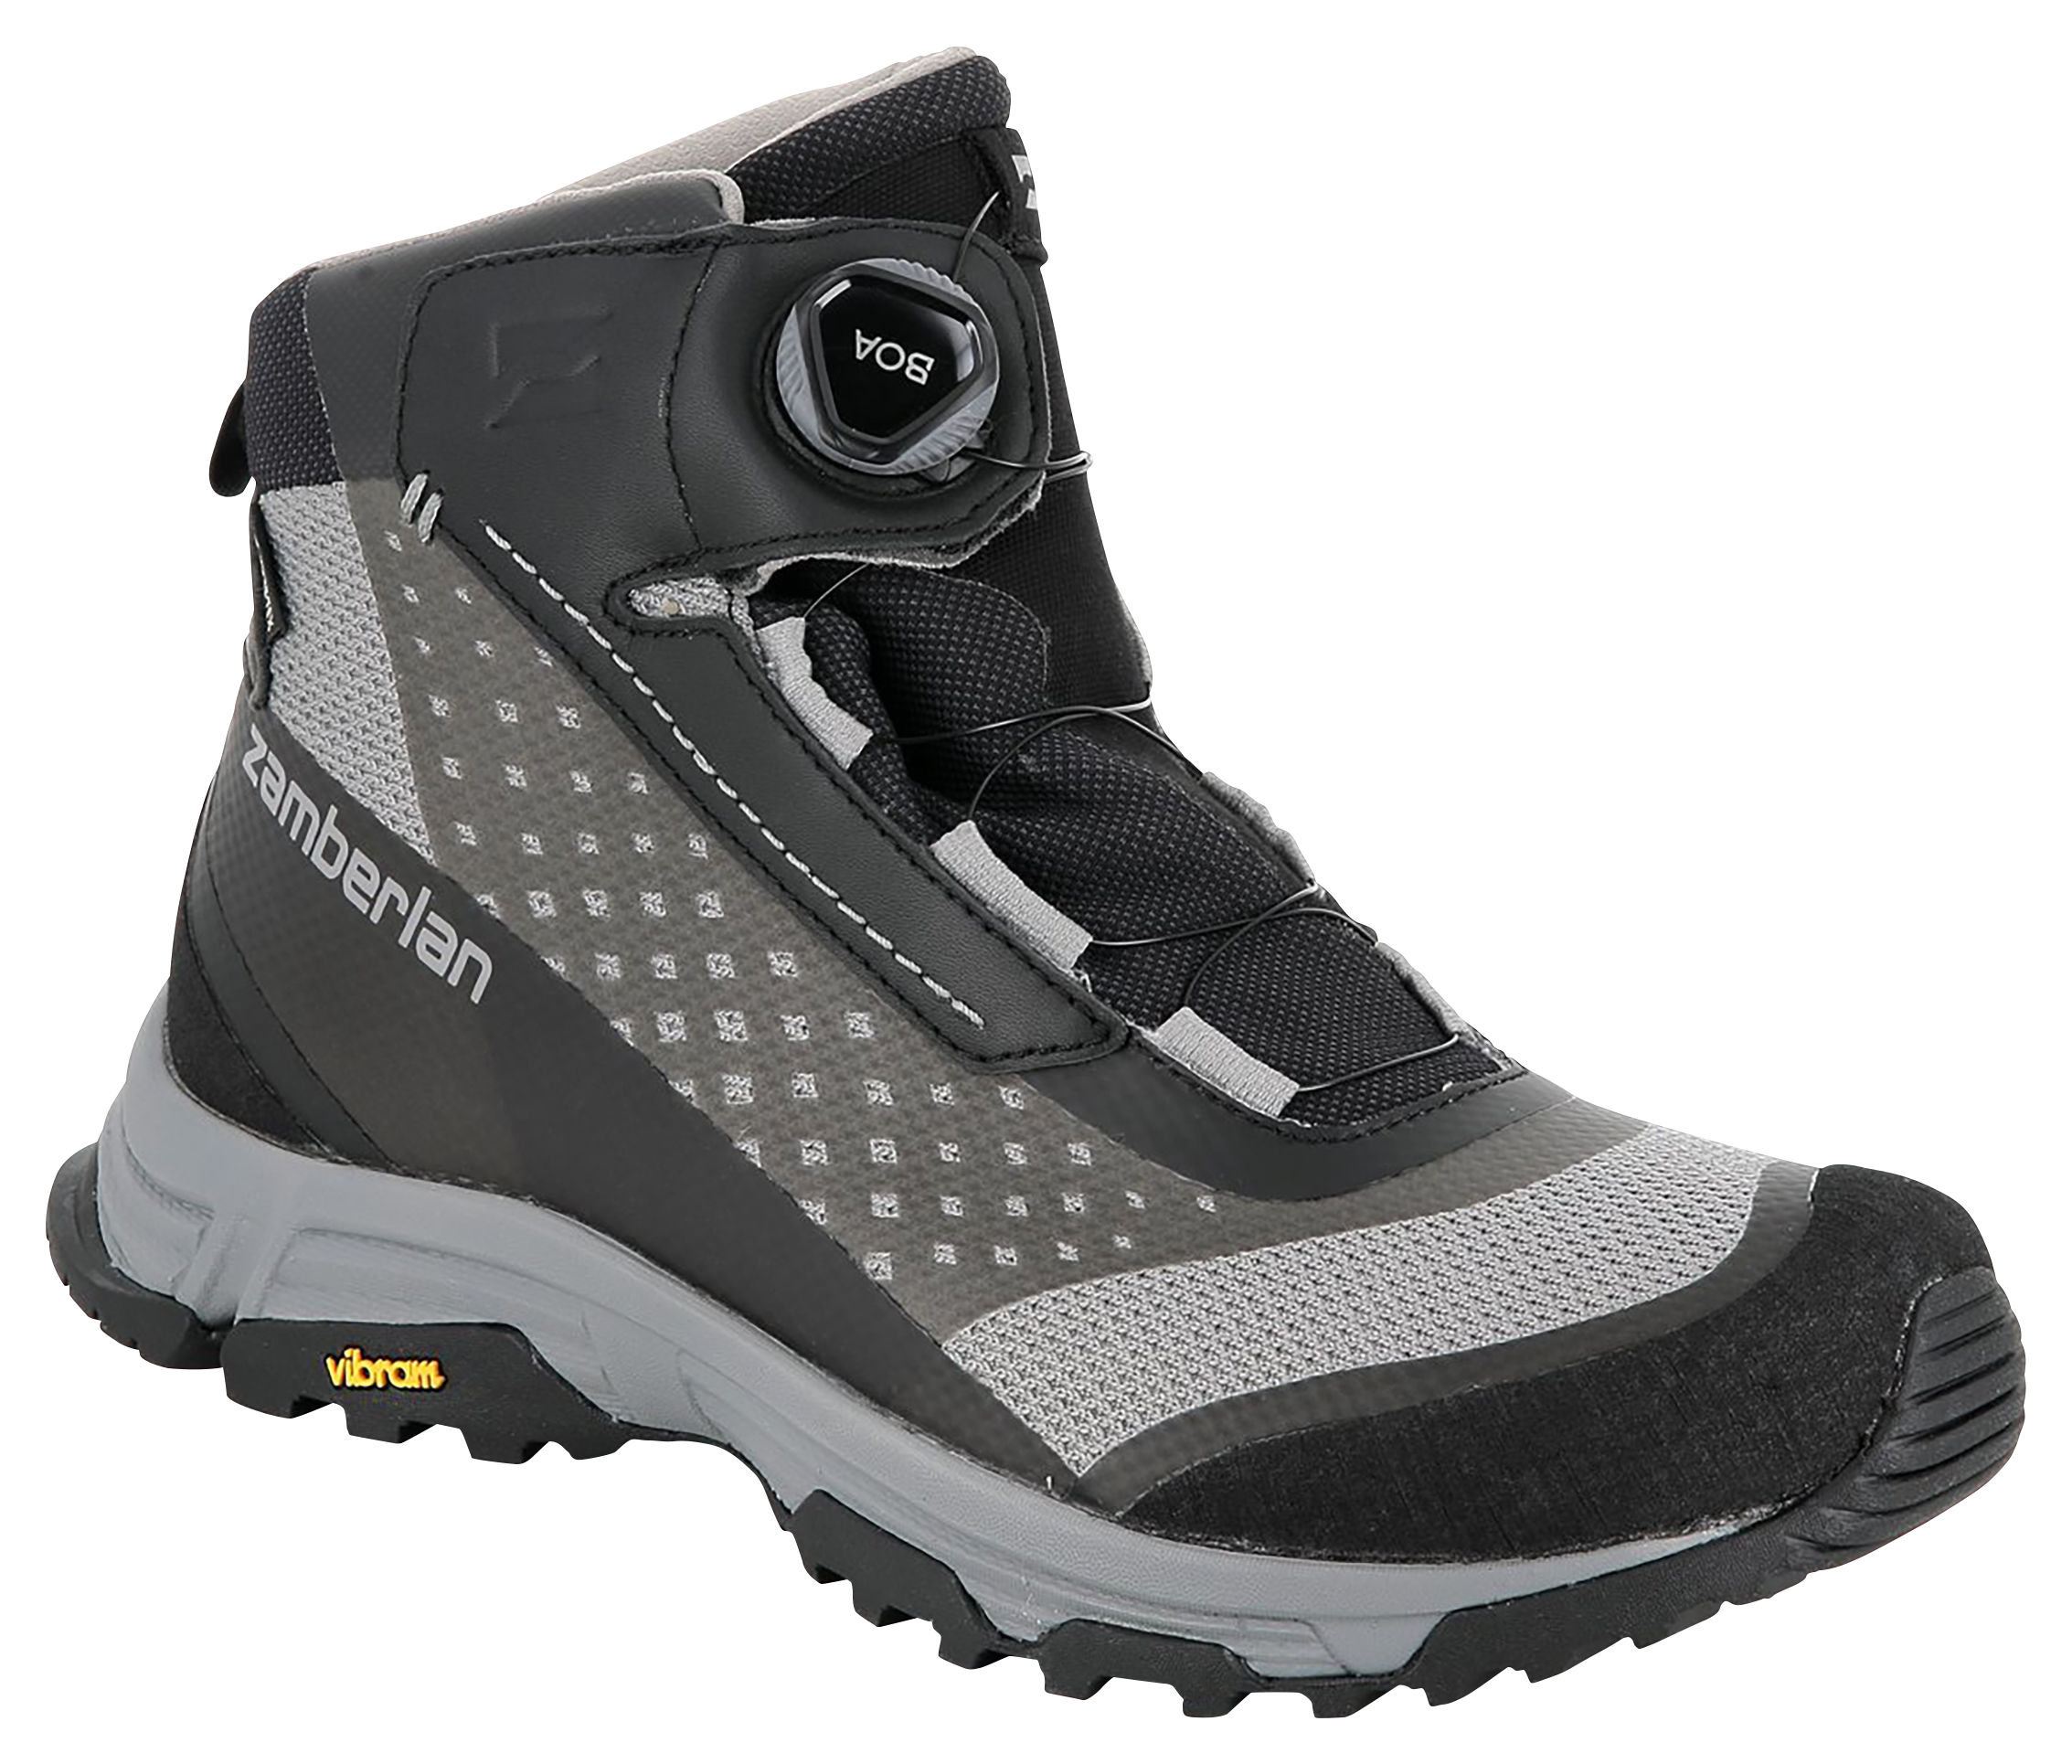 Zamberlan 166 Mamba Mid GTX RR BOA Hiking Boots for Men